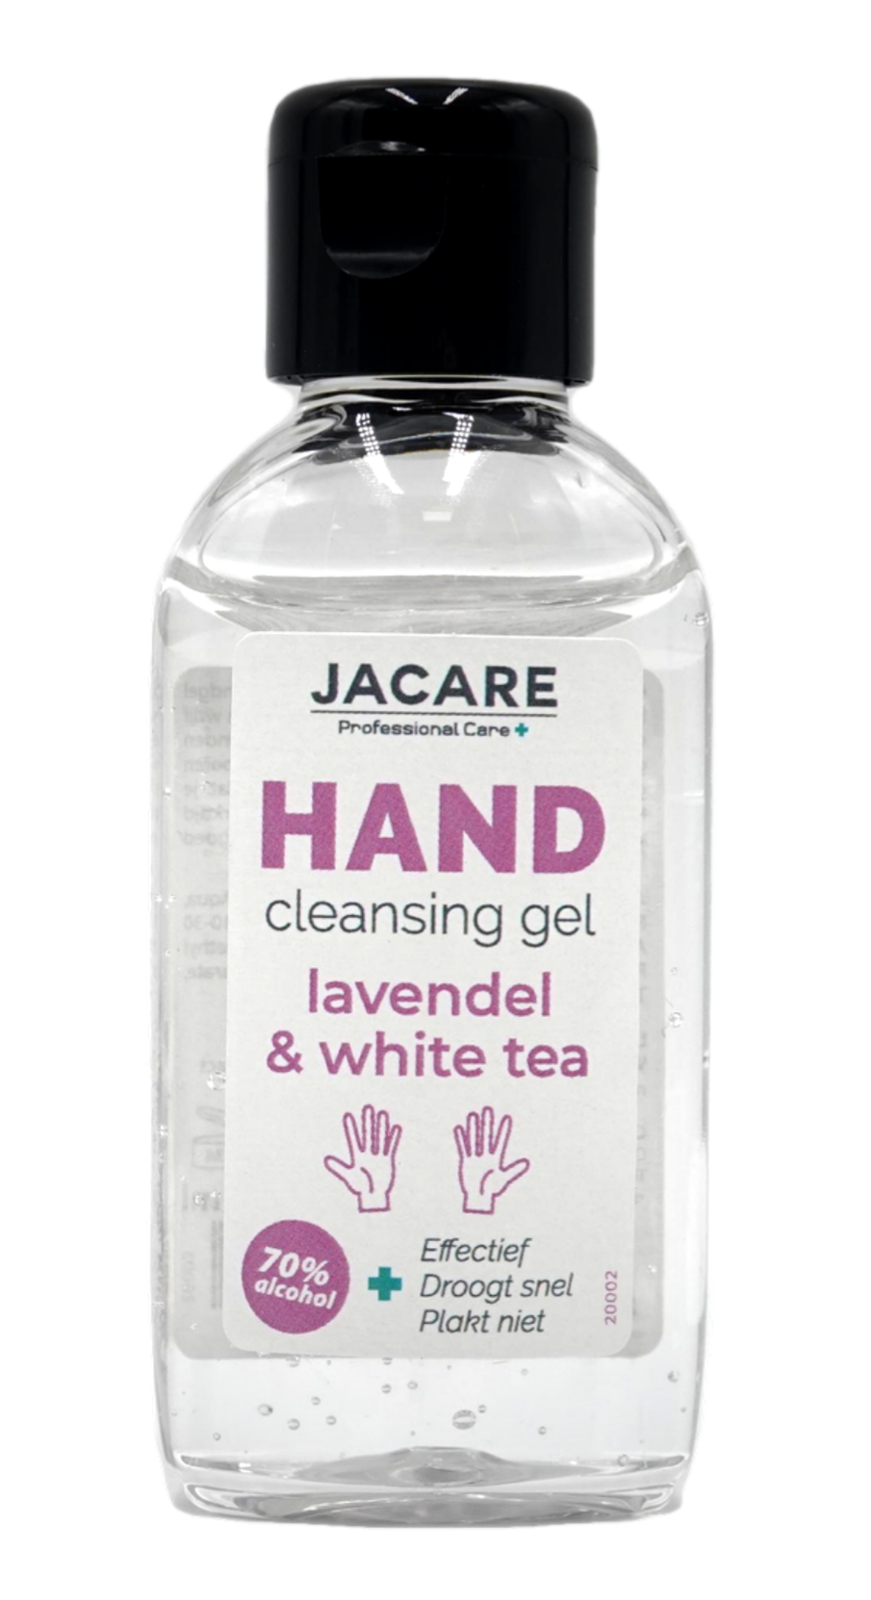 Jacare Lavendel & White Tea Cleansing Gel